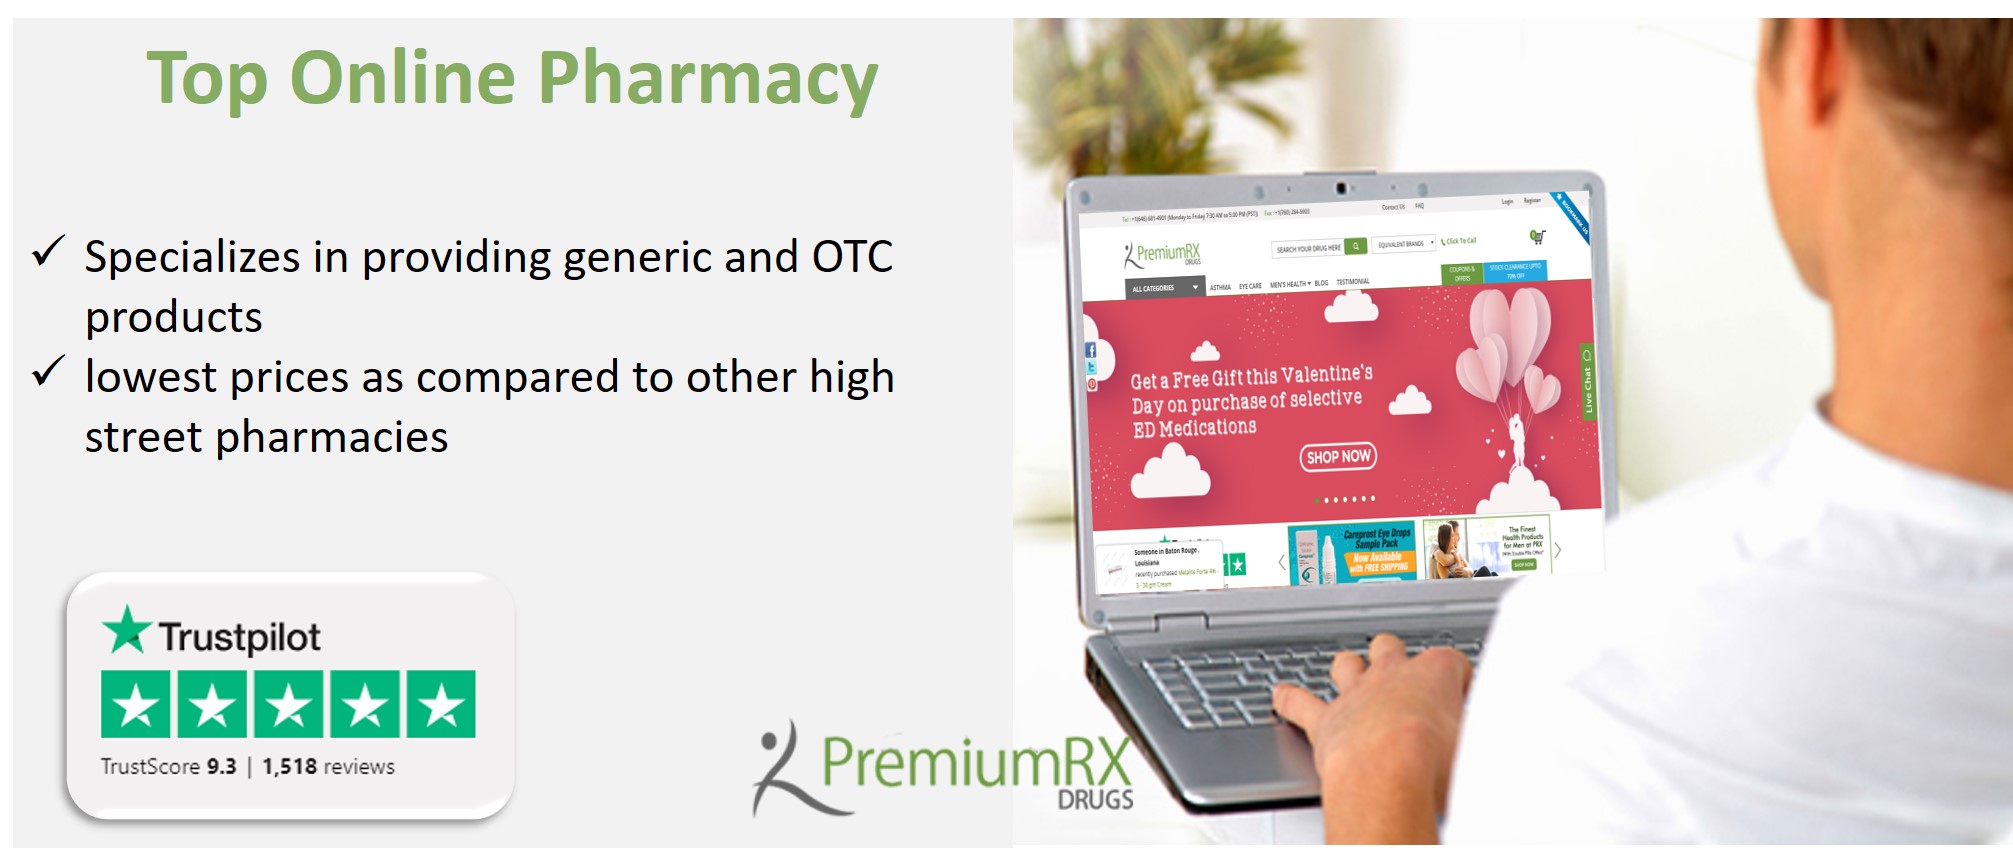 Top Online Pharmacy